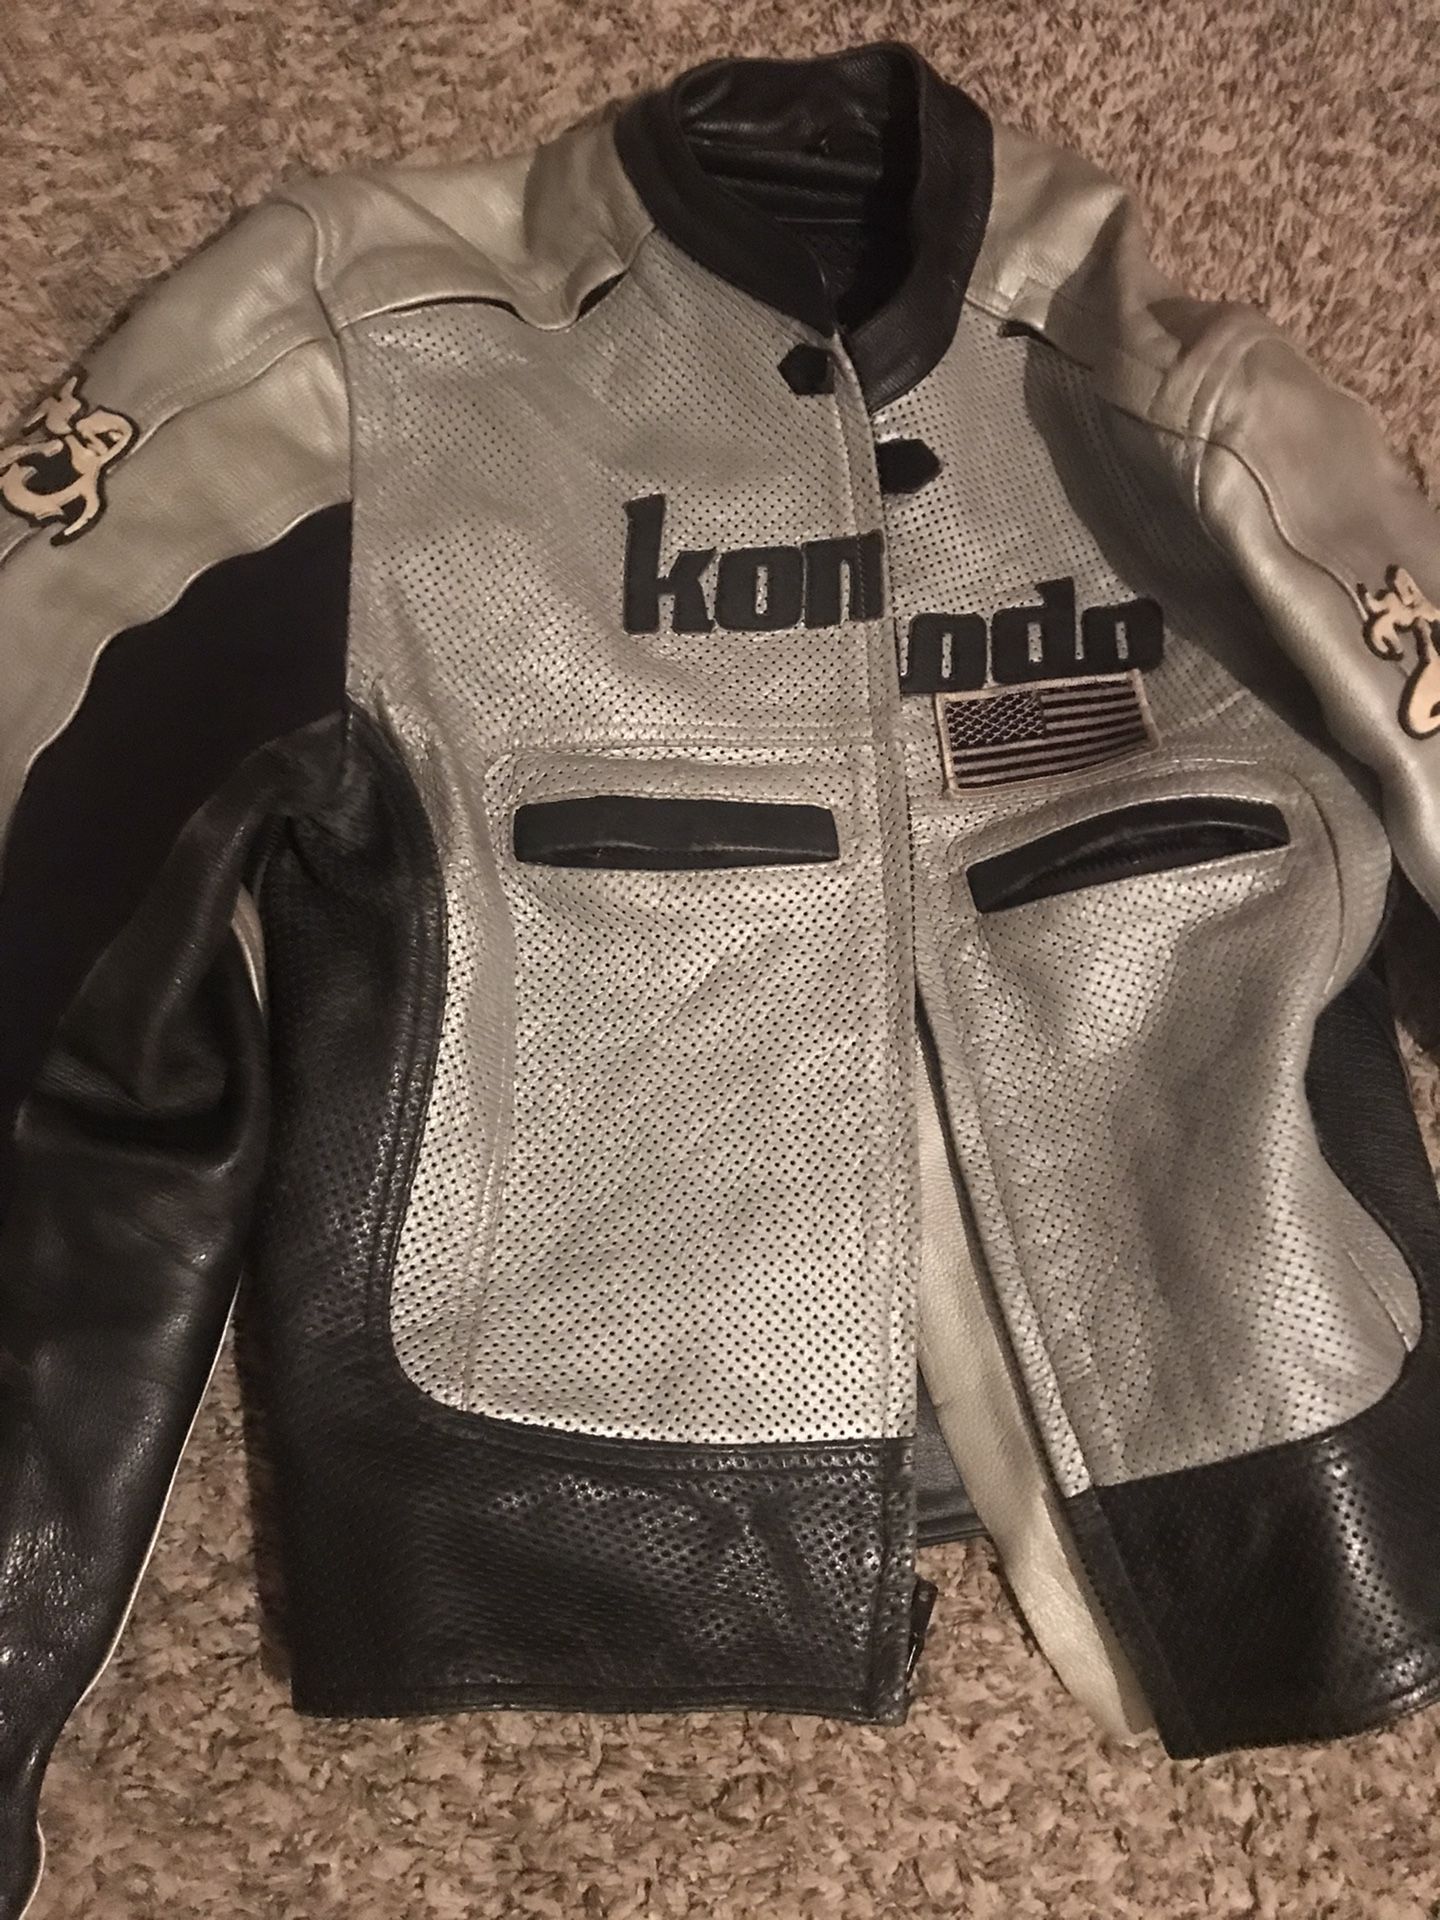 Motorcycle Jacket 